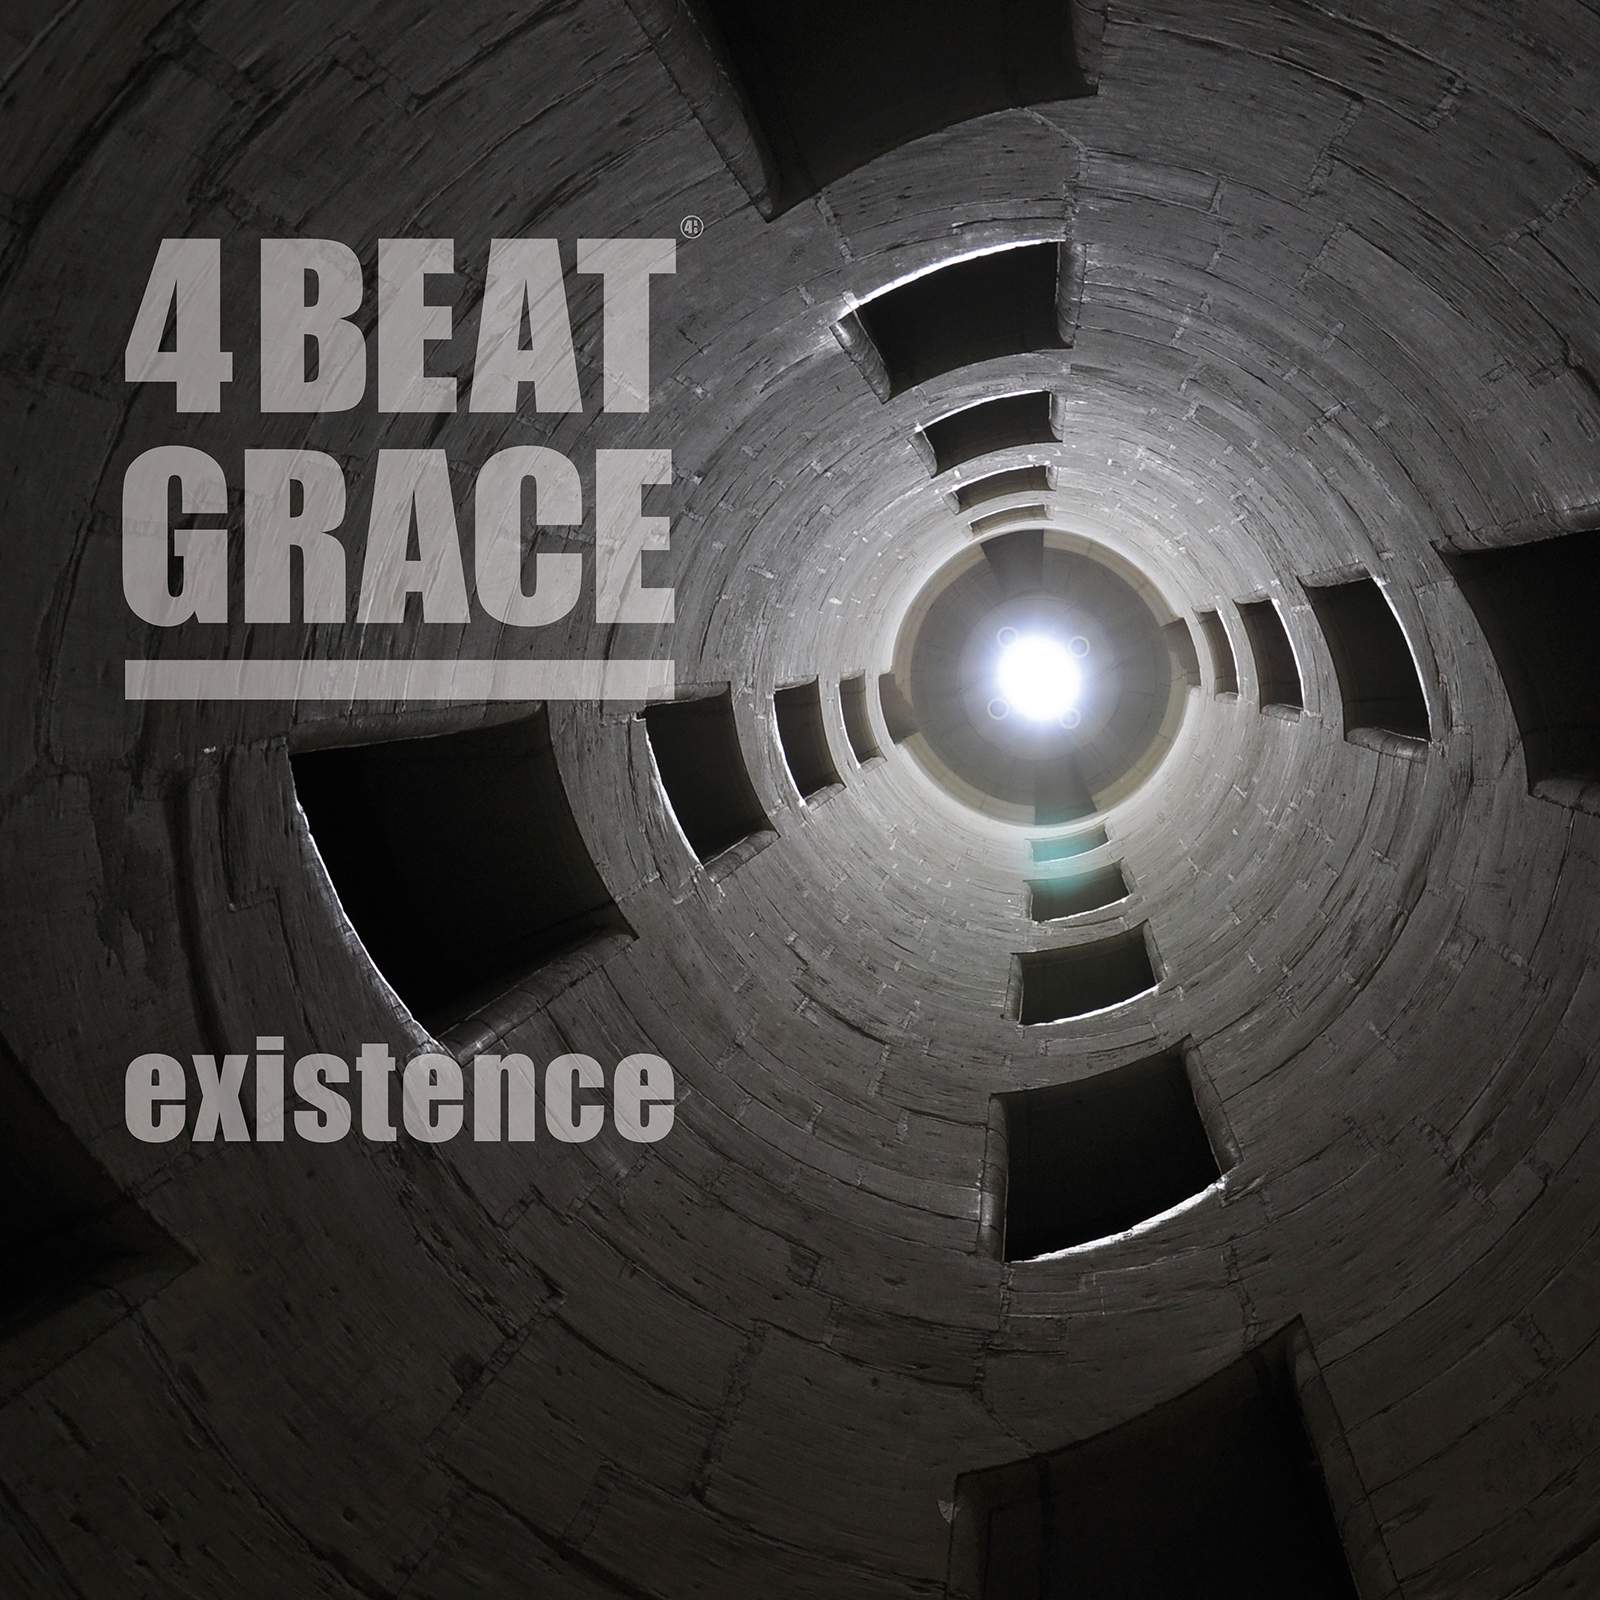 4 Beat Grace Existence Single